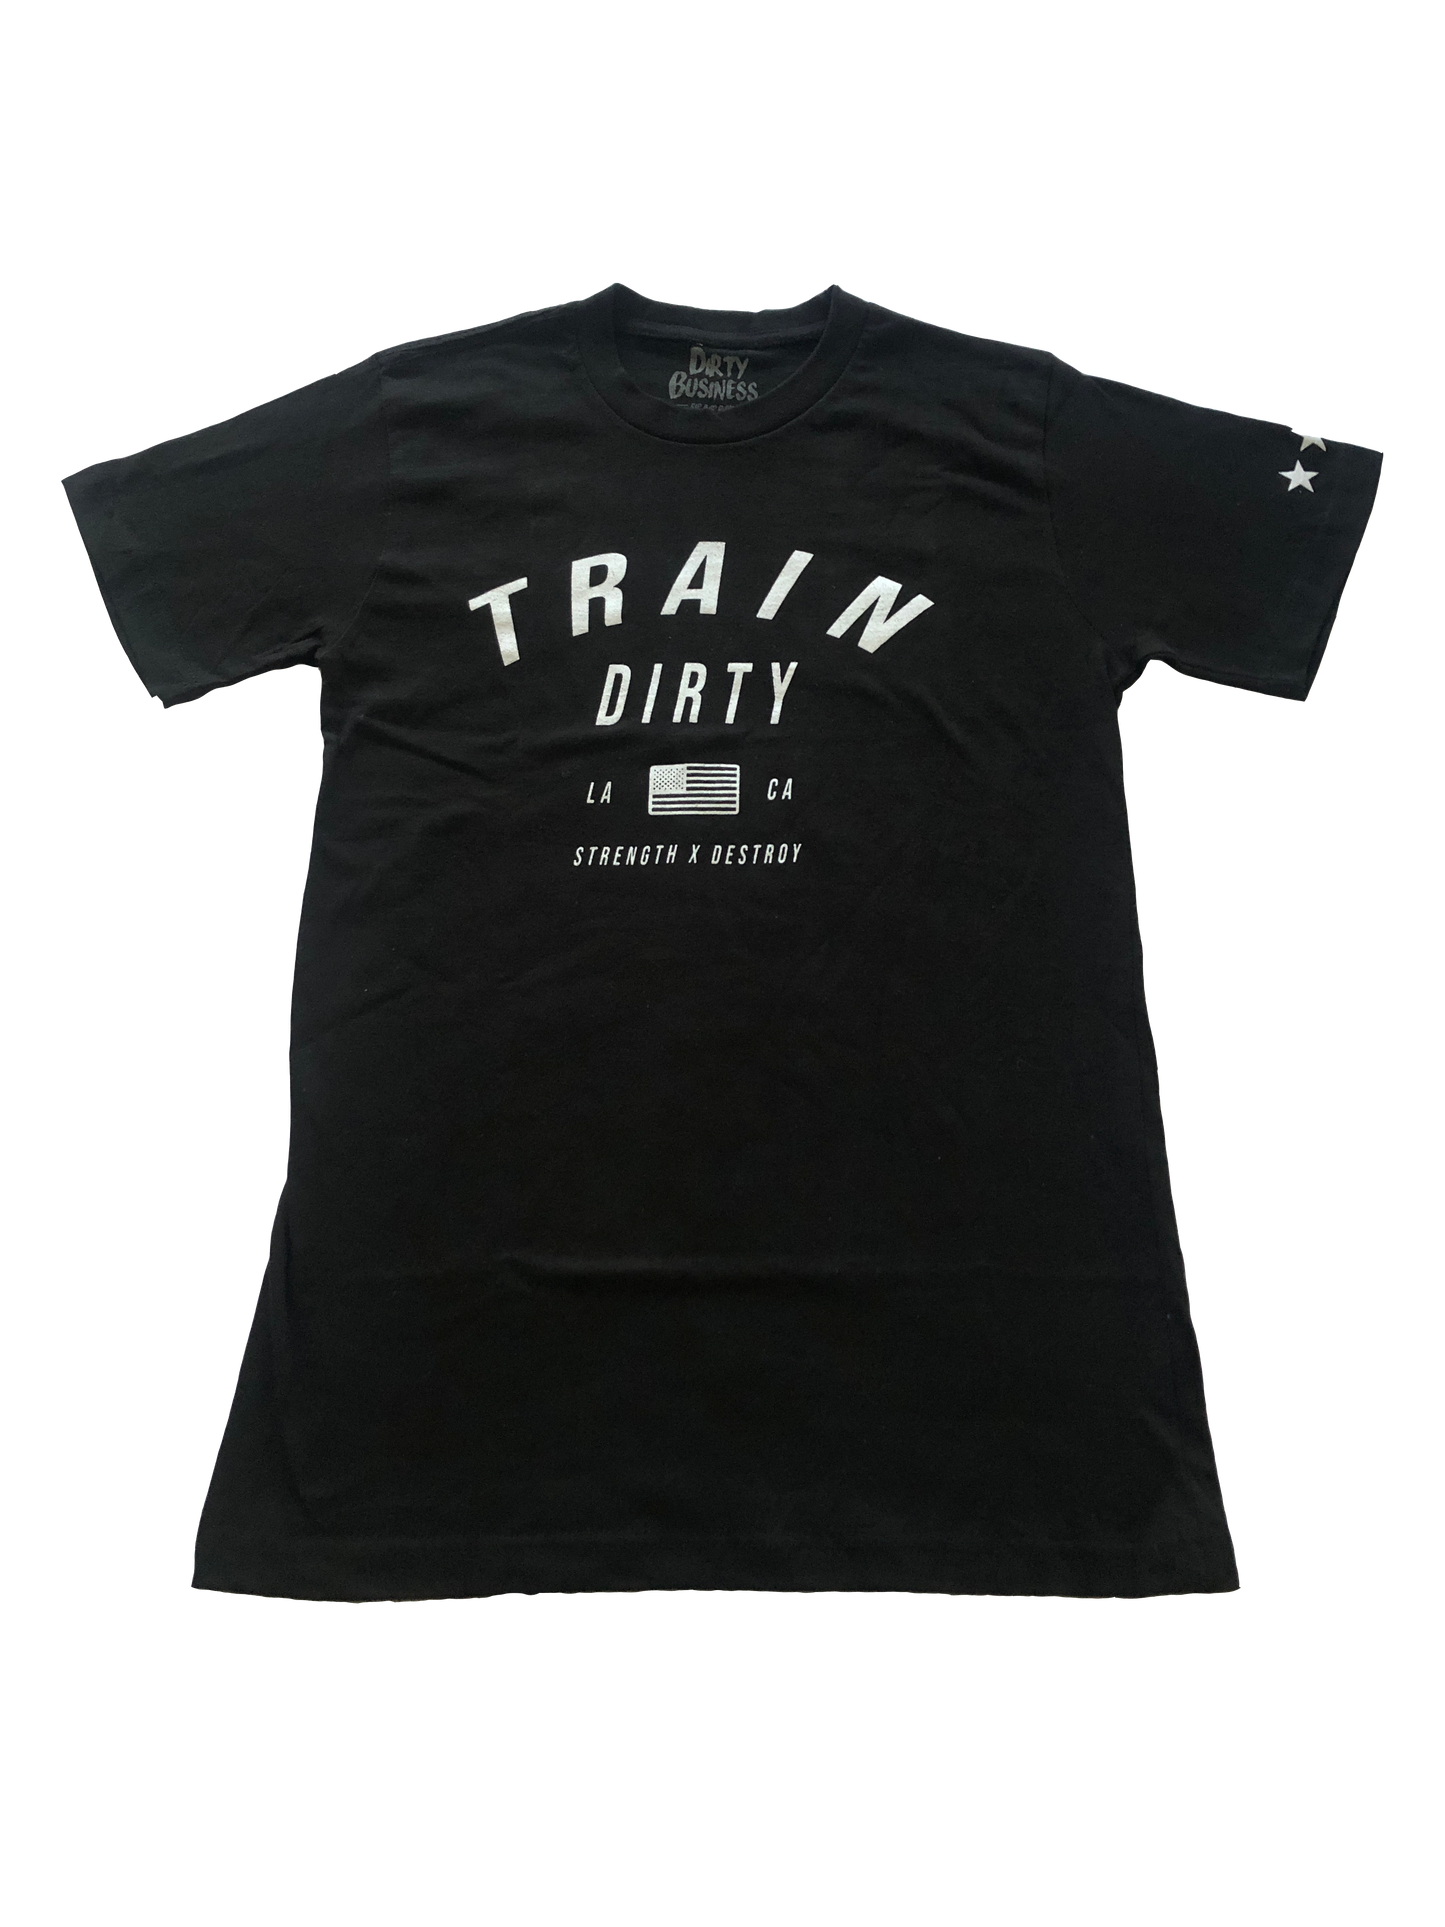 Train Dirty "Standard Issue" Tee